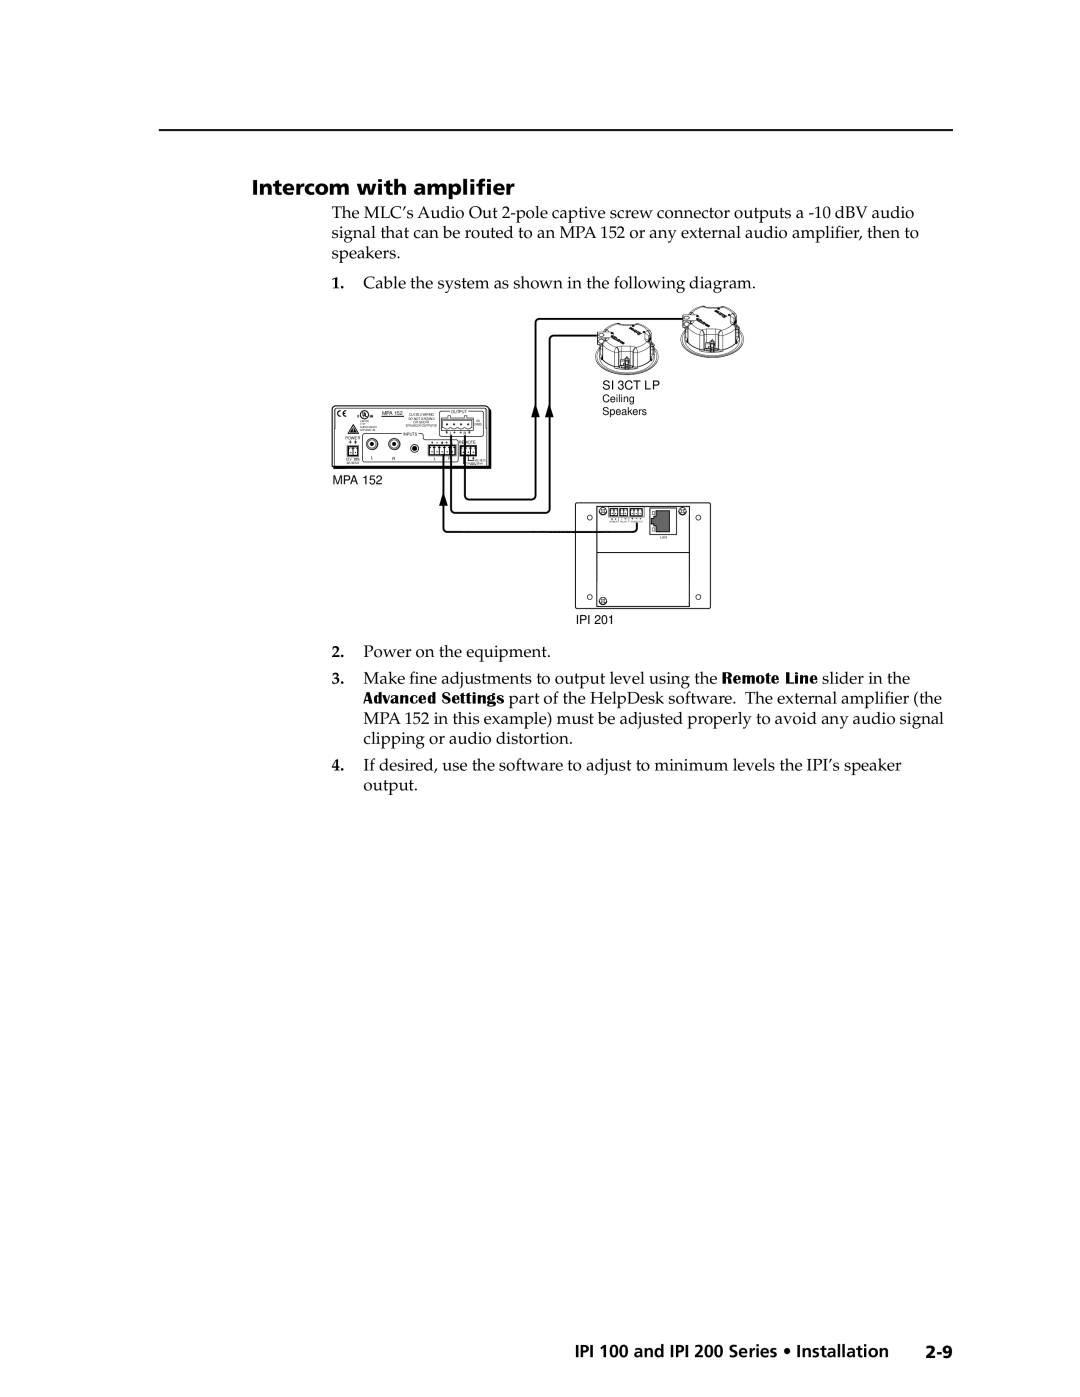 Extron electronic manual Intercom with amplifier, IPI 100 and IPI 200 Series Installation 